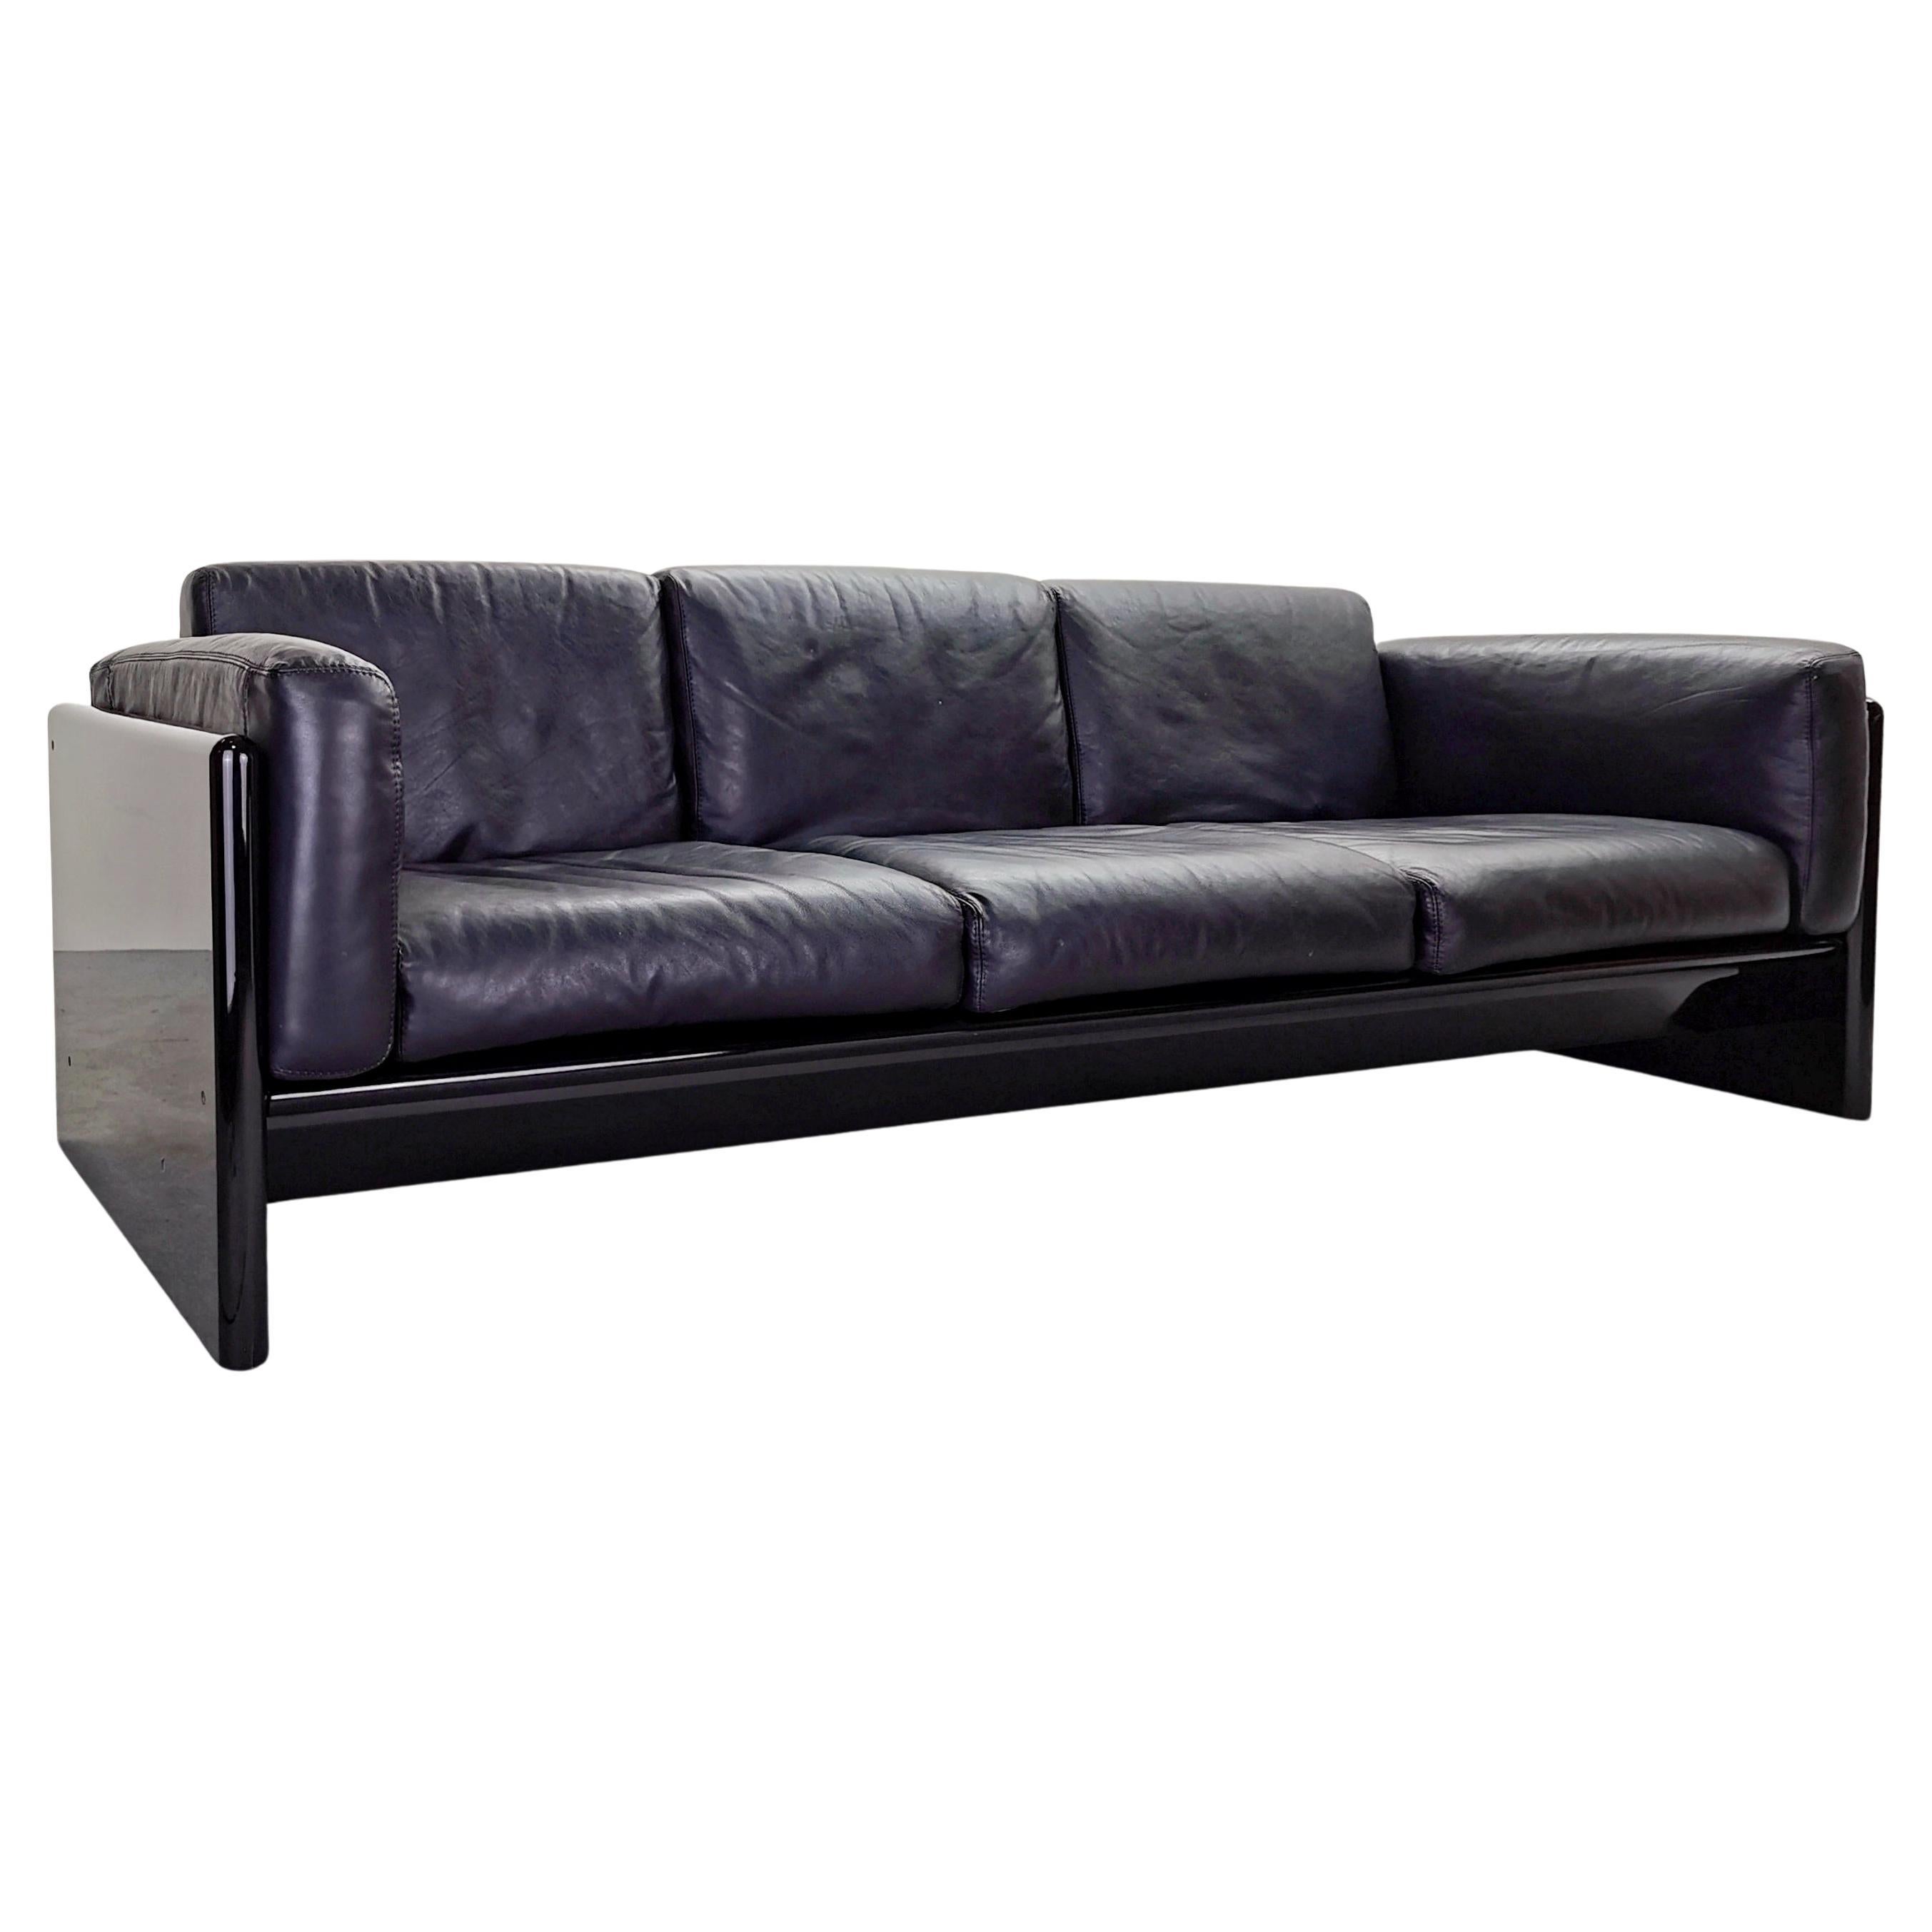 3-Sitzer Sofa aus Leder und Lack Studio Simon von Gavina im Angebot